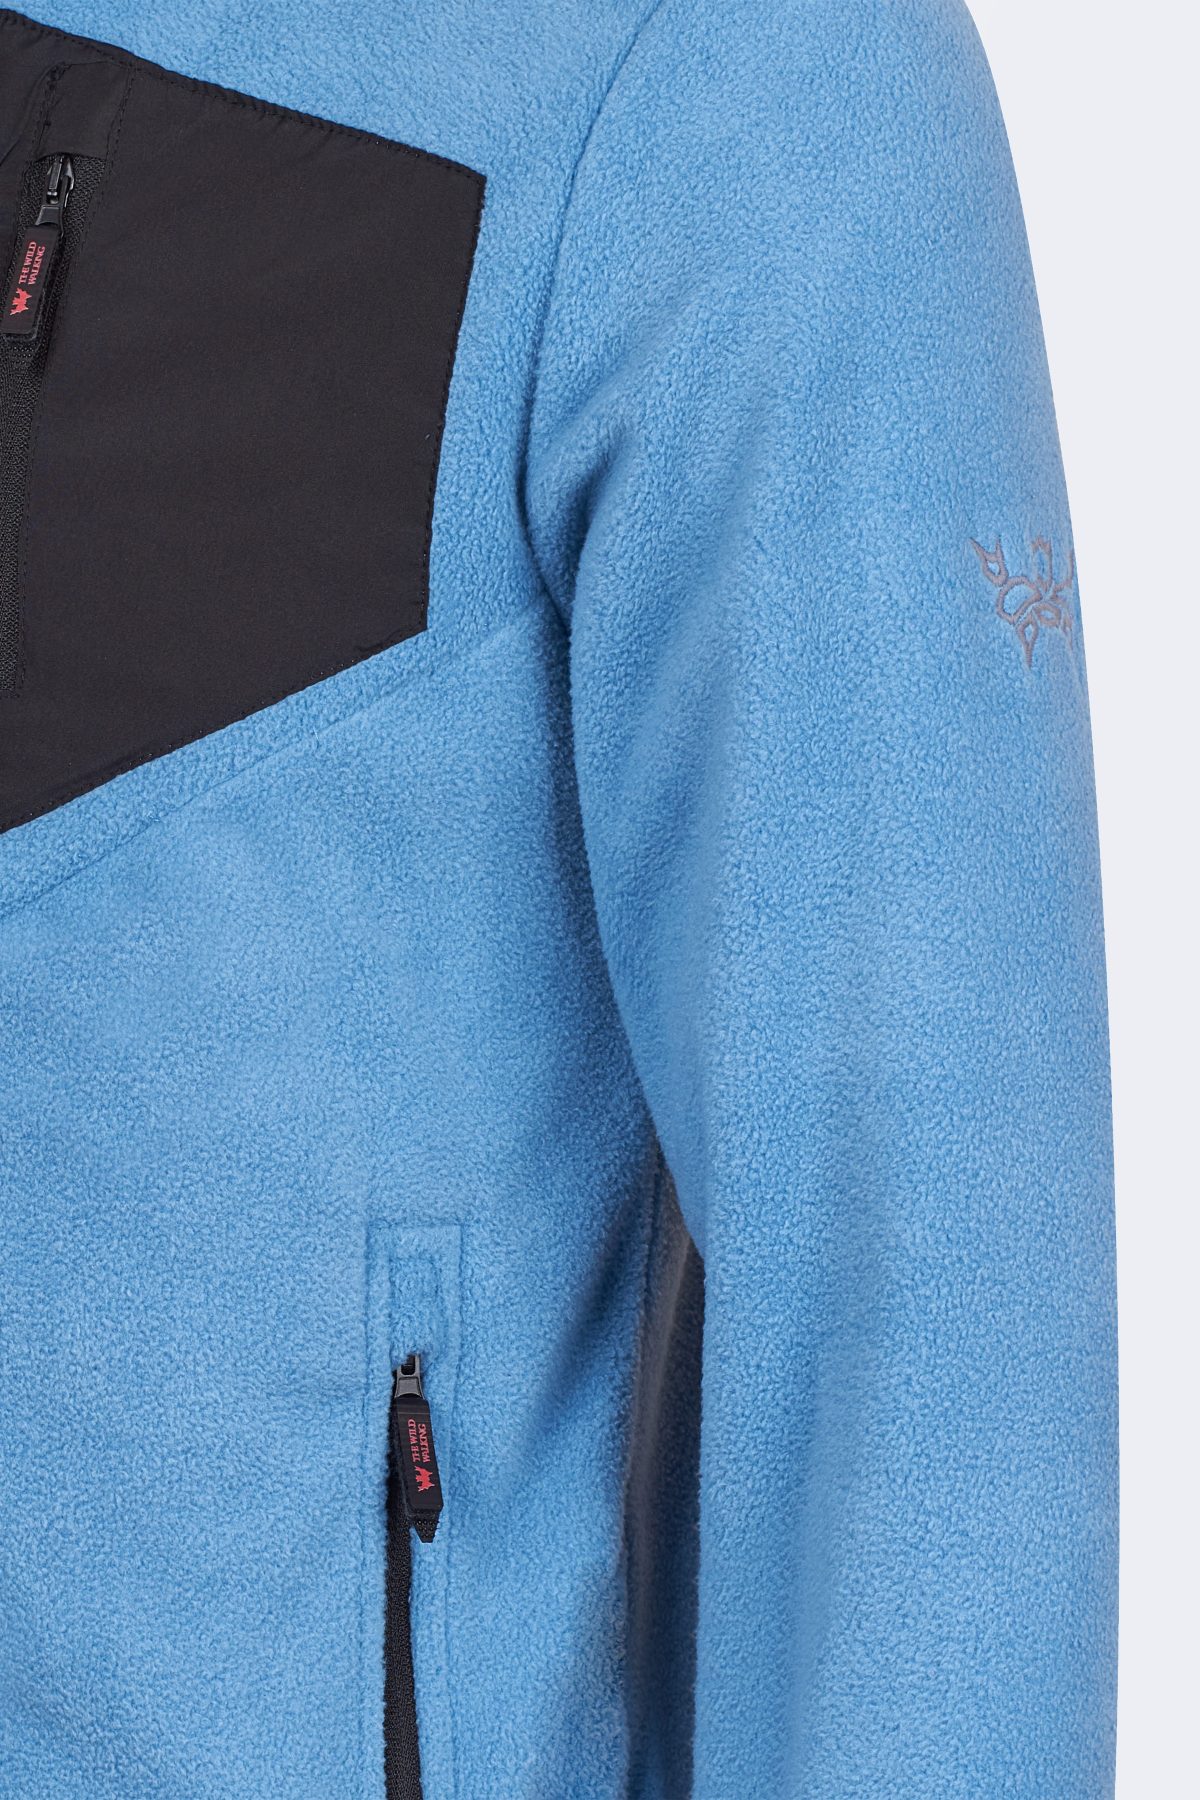 Stylish Fleece with Embroidered Logo – Turquoise-4468